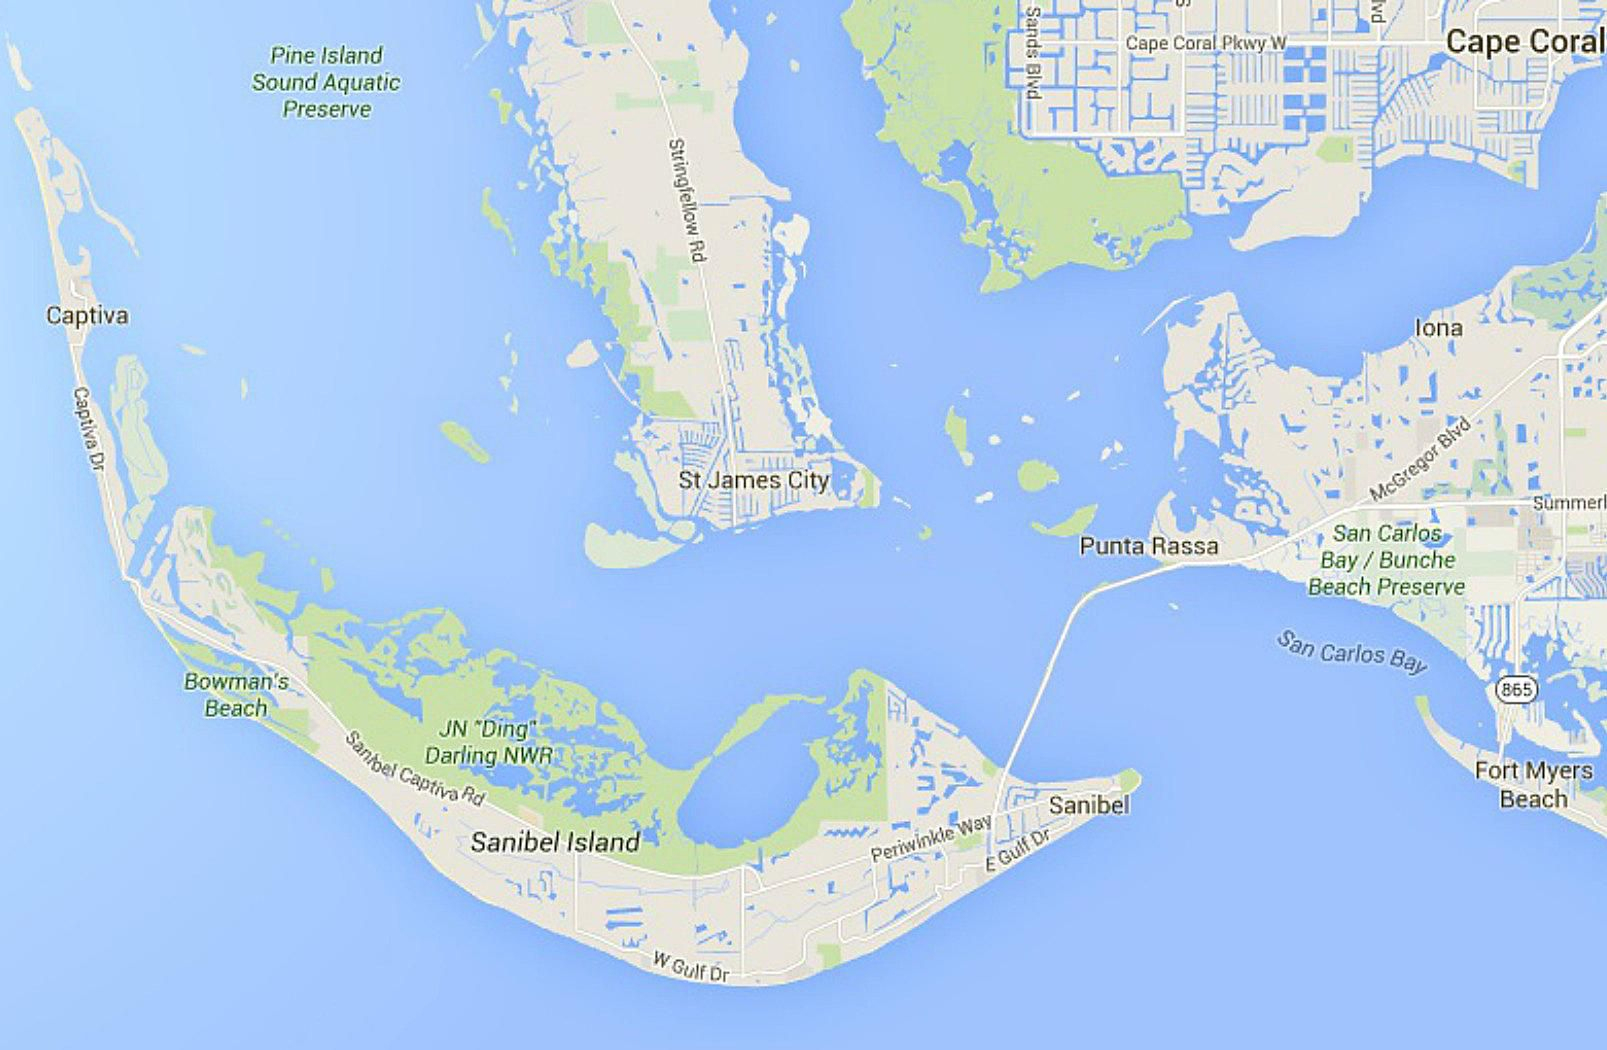 Maps Of Florida: Orlando, Tampa, Miami, Keys, And More - Google Maps Sanibel Island Florida